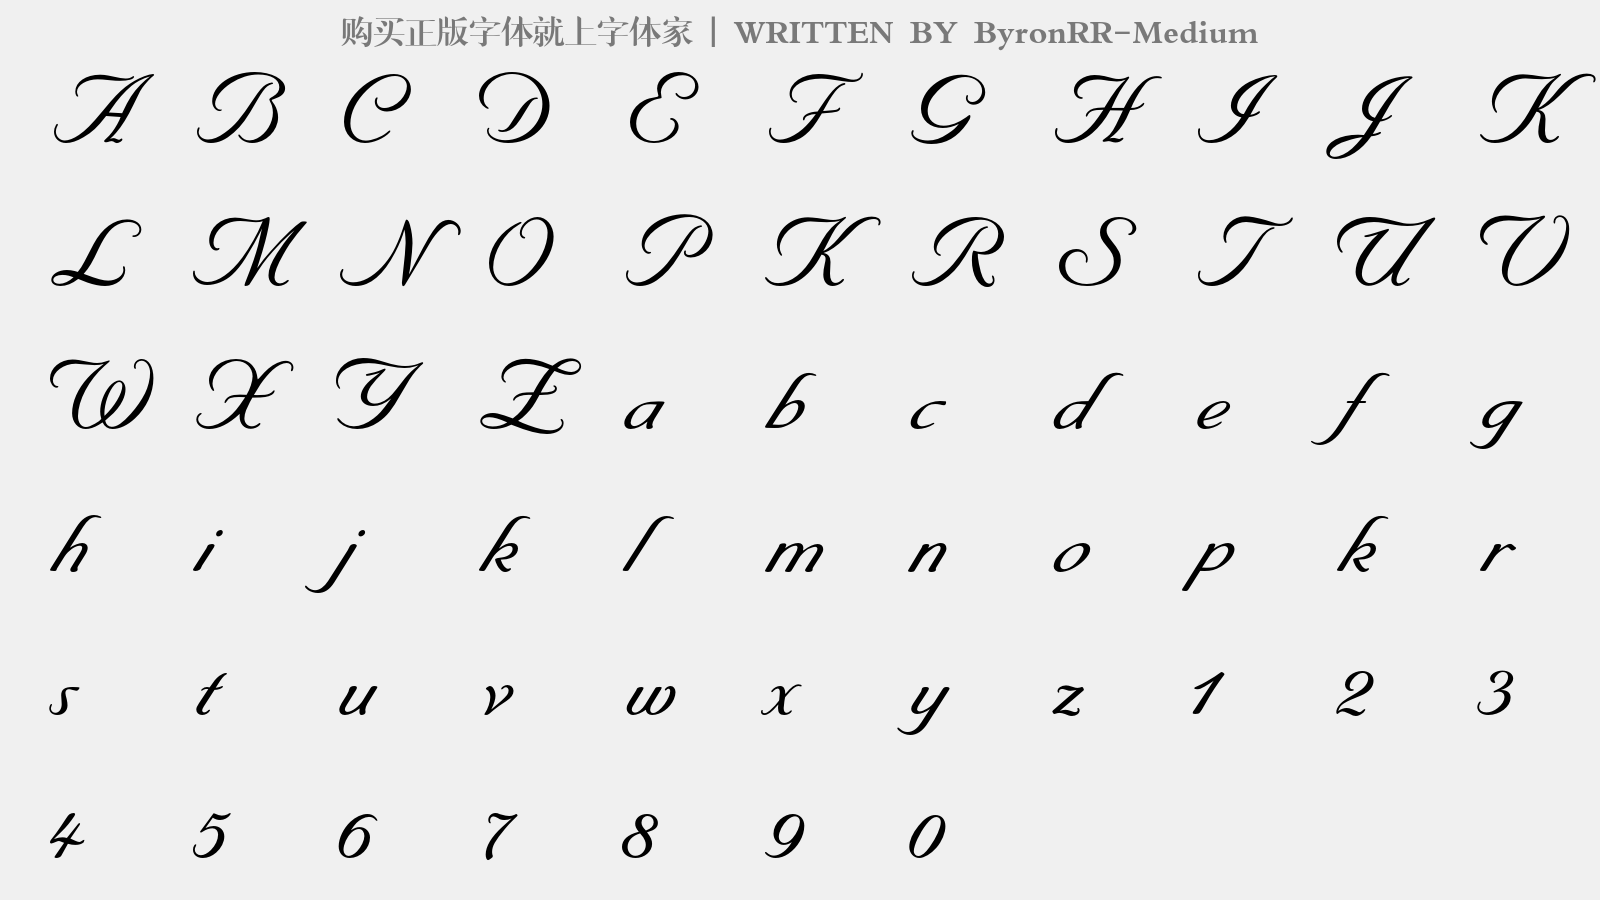 ByronRR-Medium - 大写字母/小写字母/数字